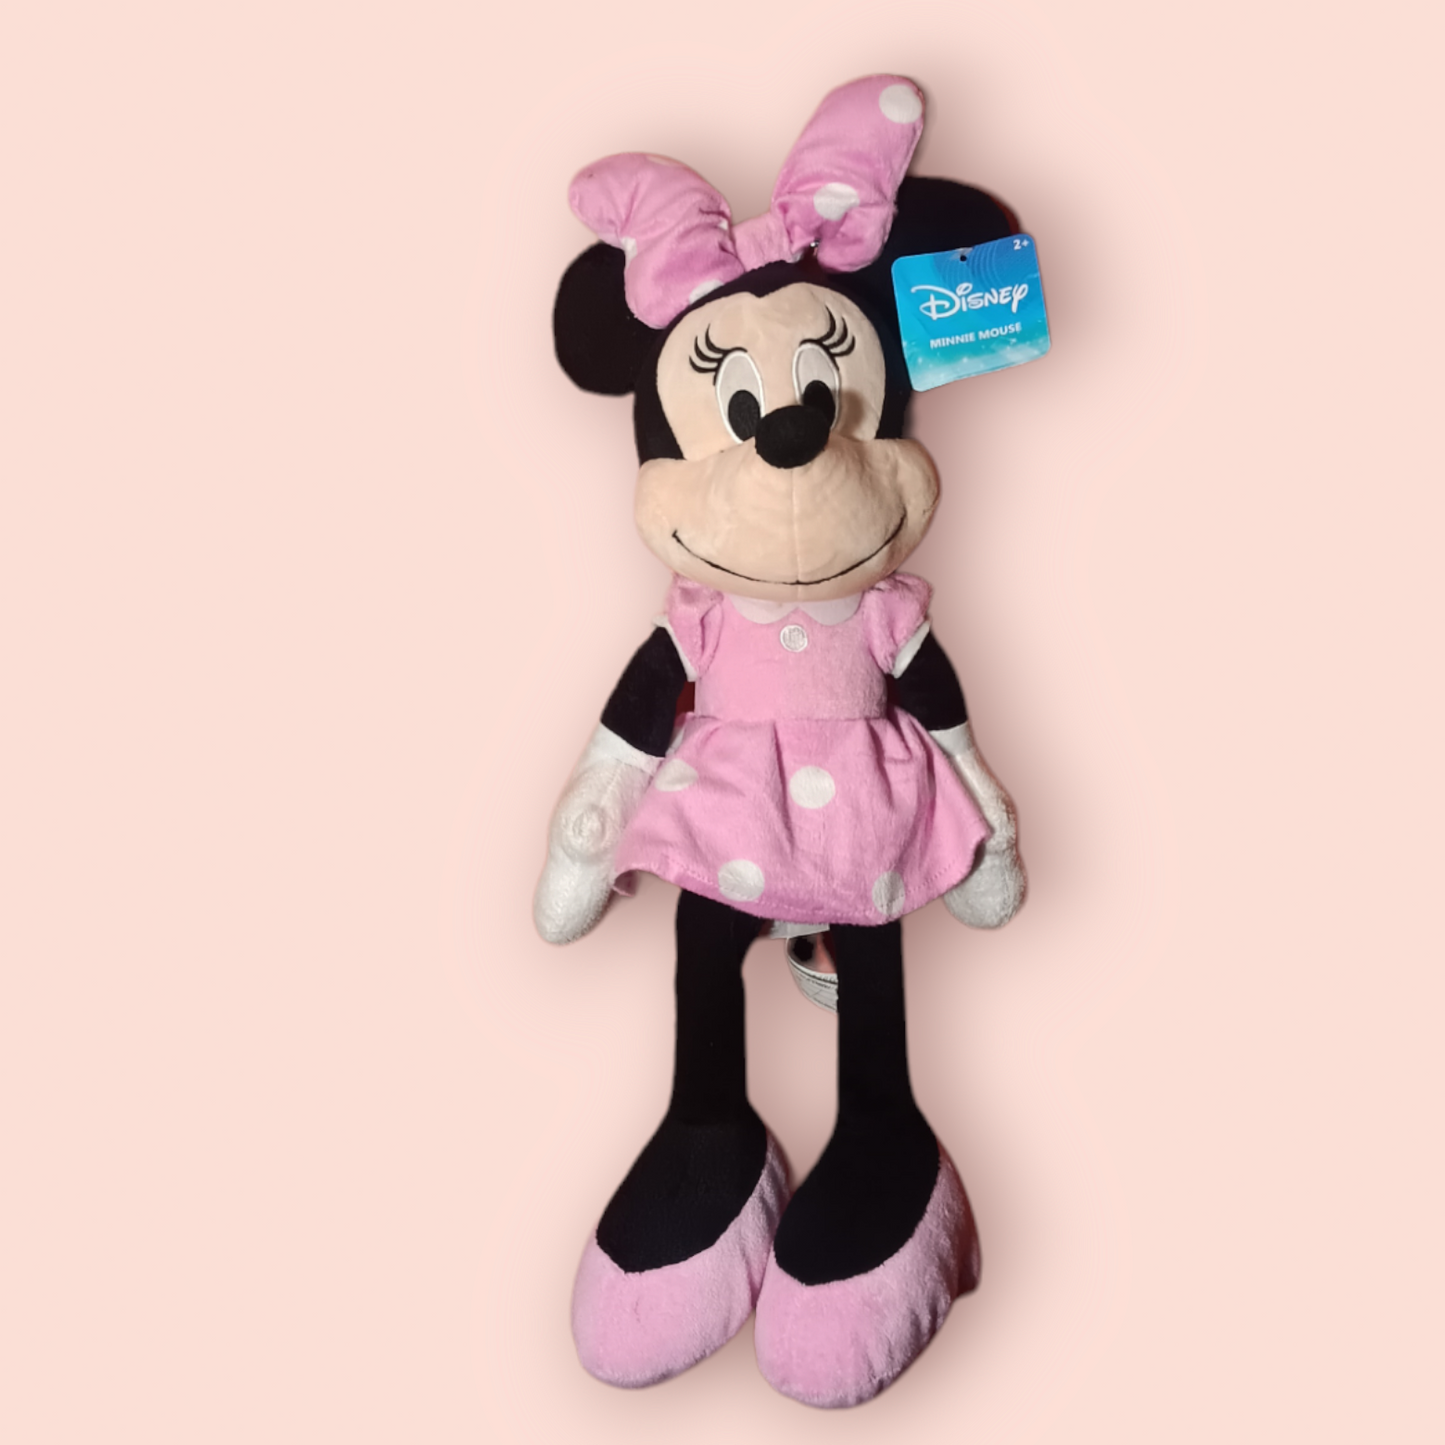 Disney Minnie Mouse Pink Polka Dot Soft Plush Stuffed Animal Doll Toy 20”